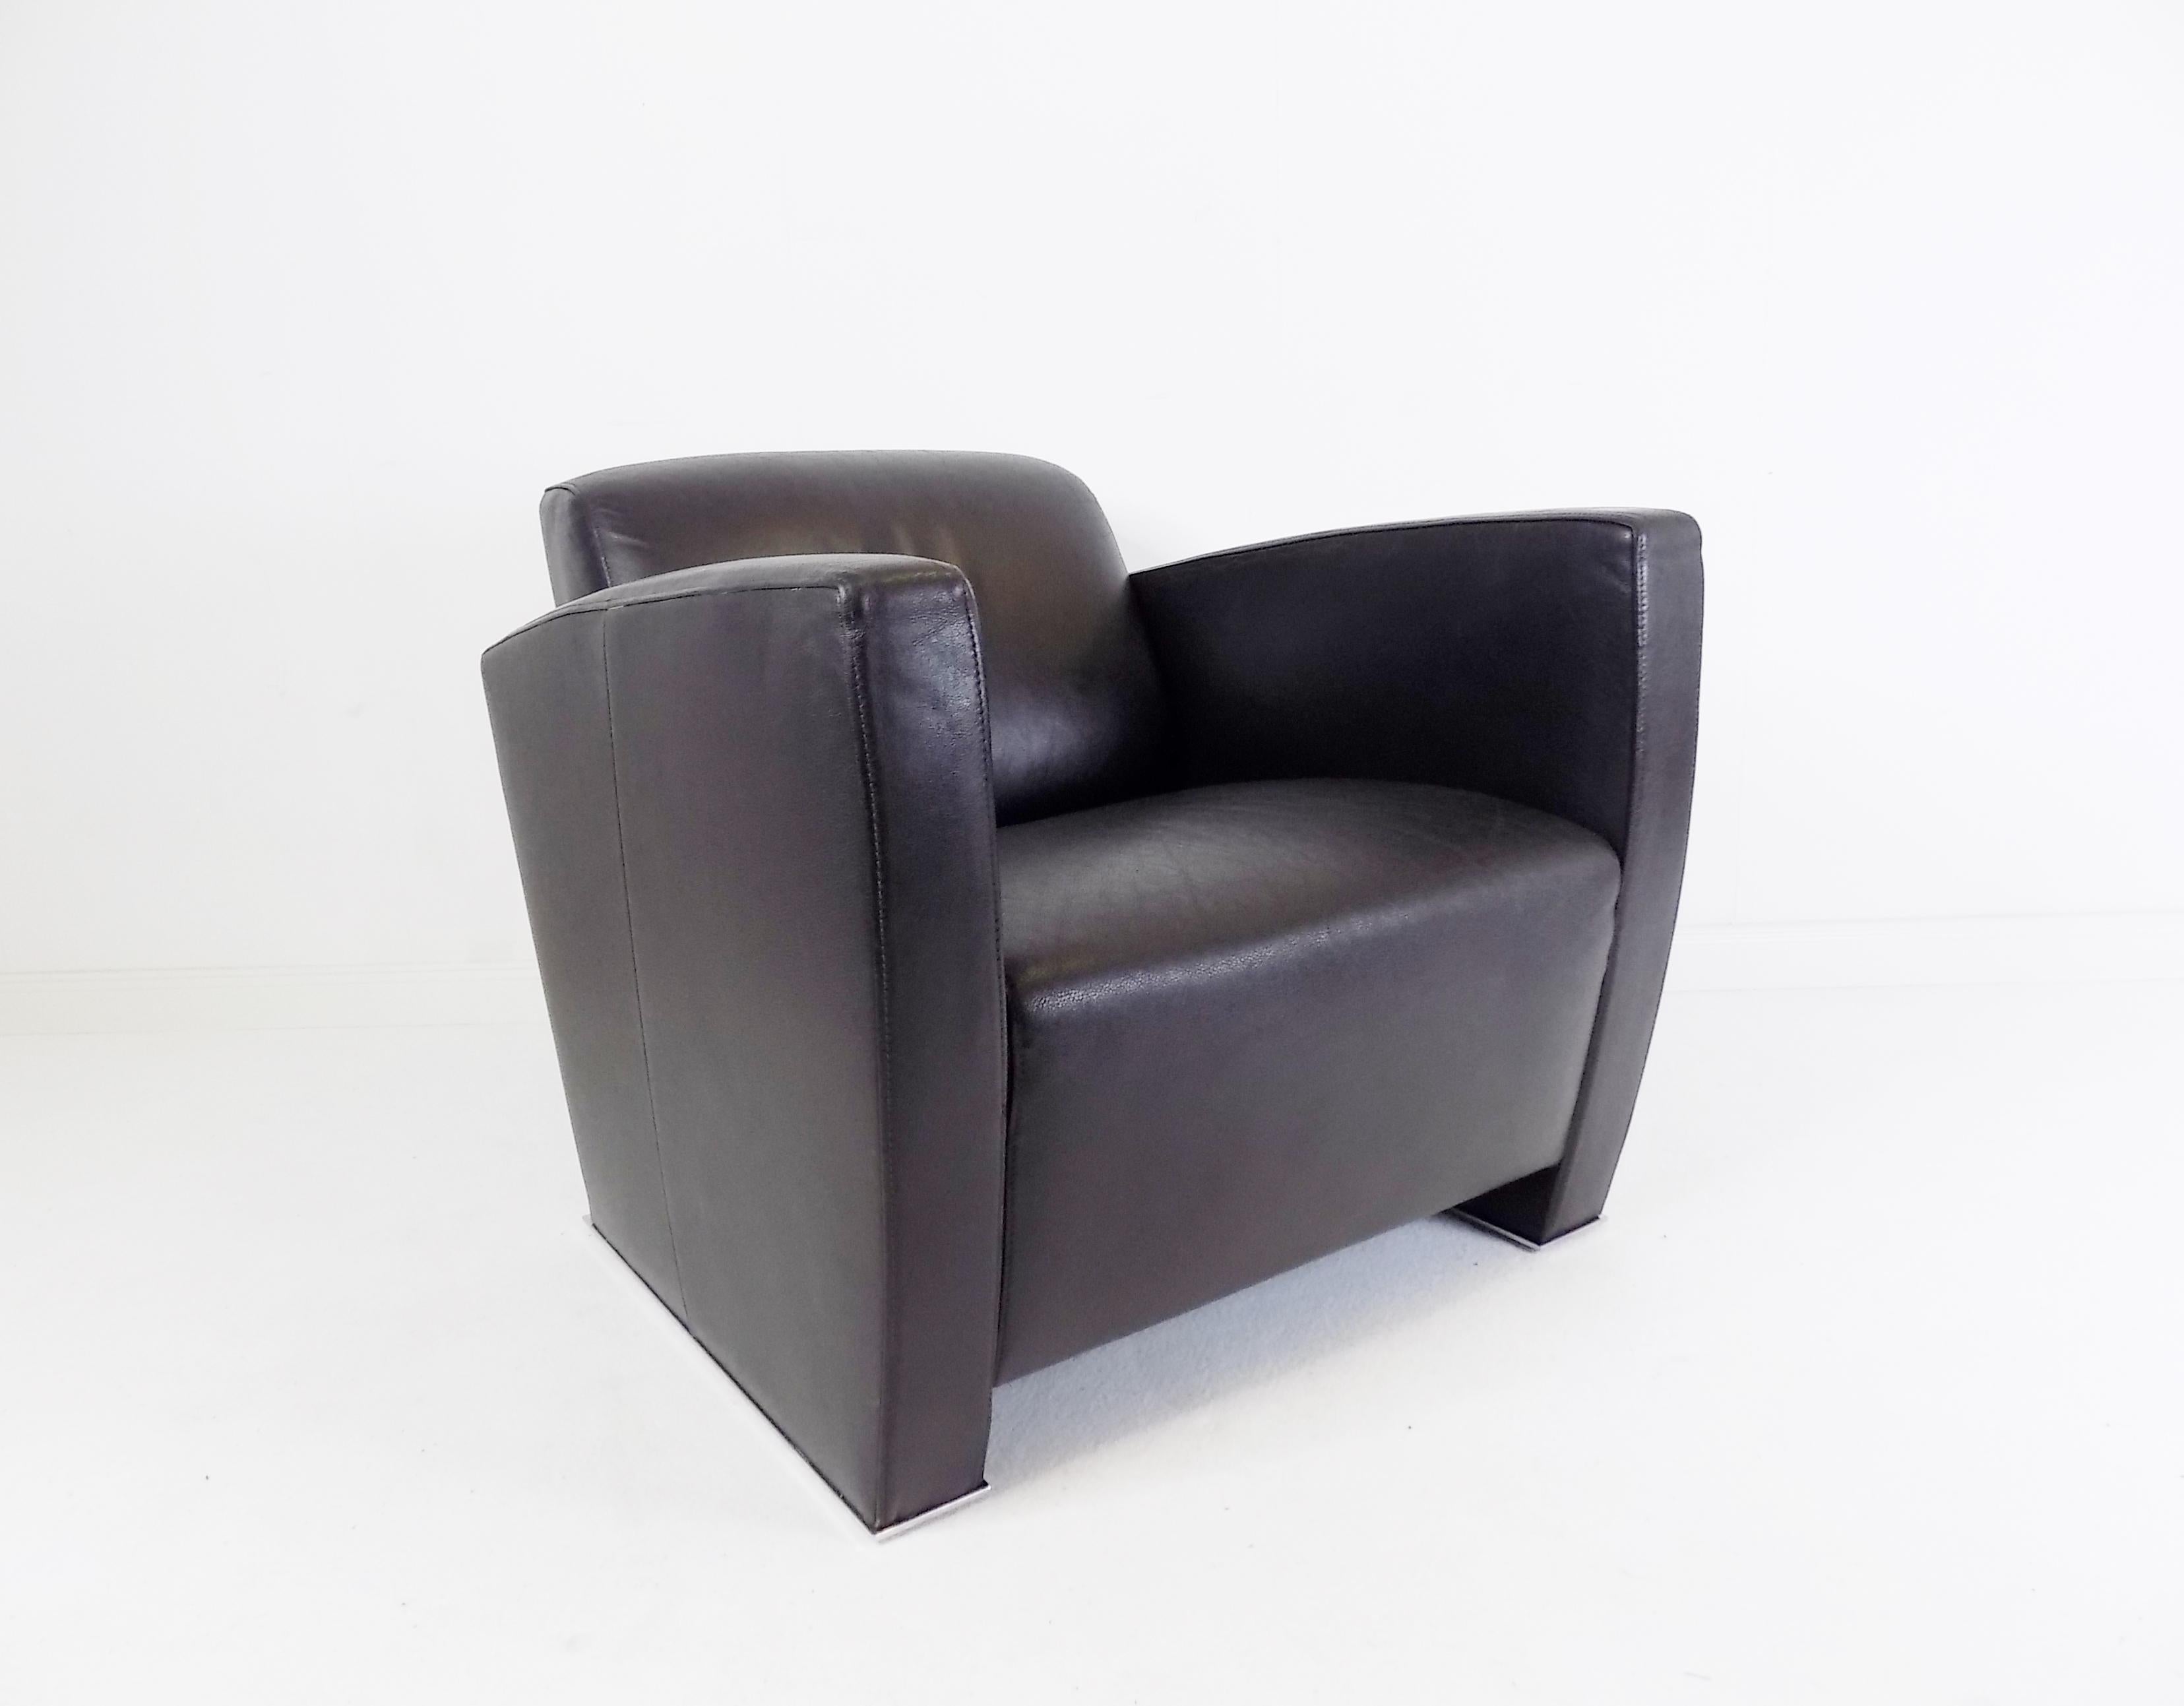 Leather De Sede DS 420 leather armchair by Jean-Pierre Dovat